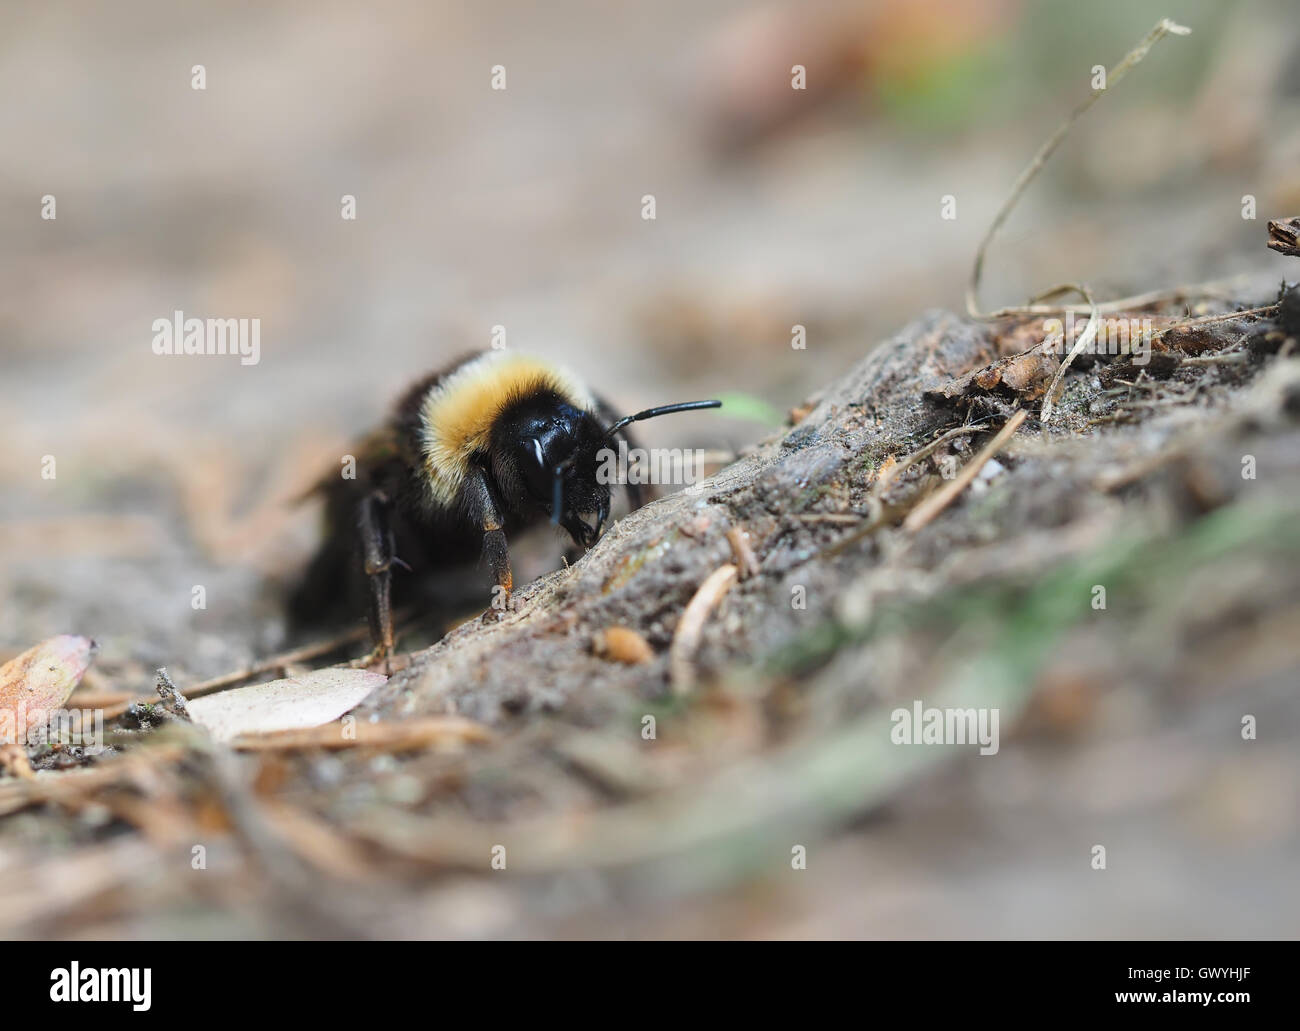 bumblebee on the ground Stock Photo